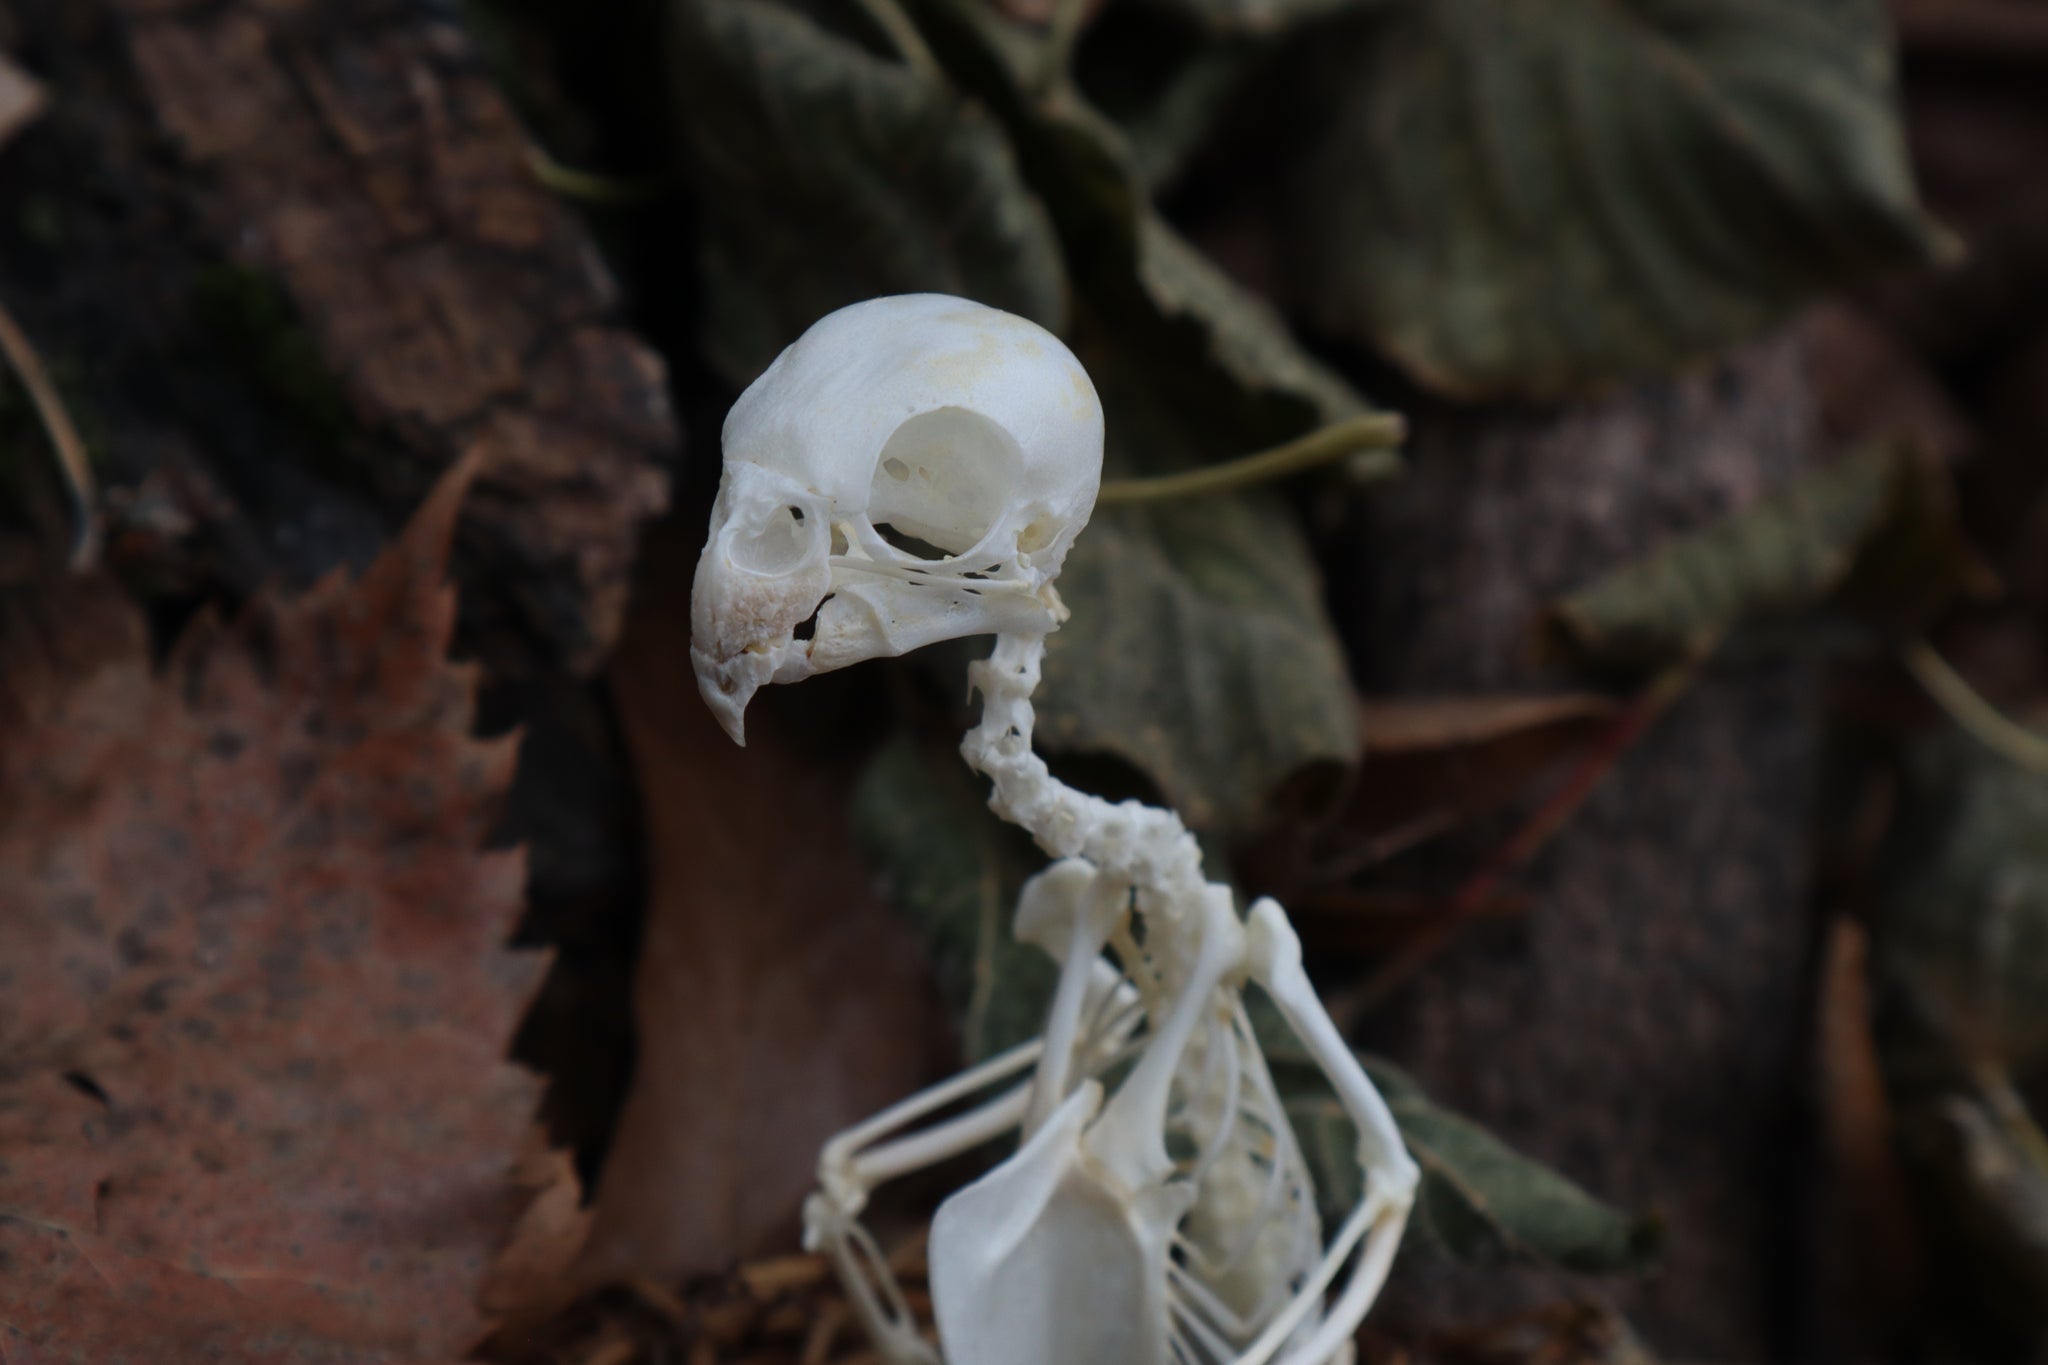 Articulated Parakeet Skeleton in Wormwood Nest